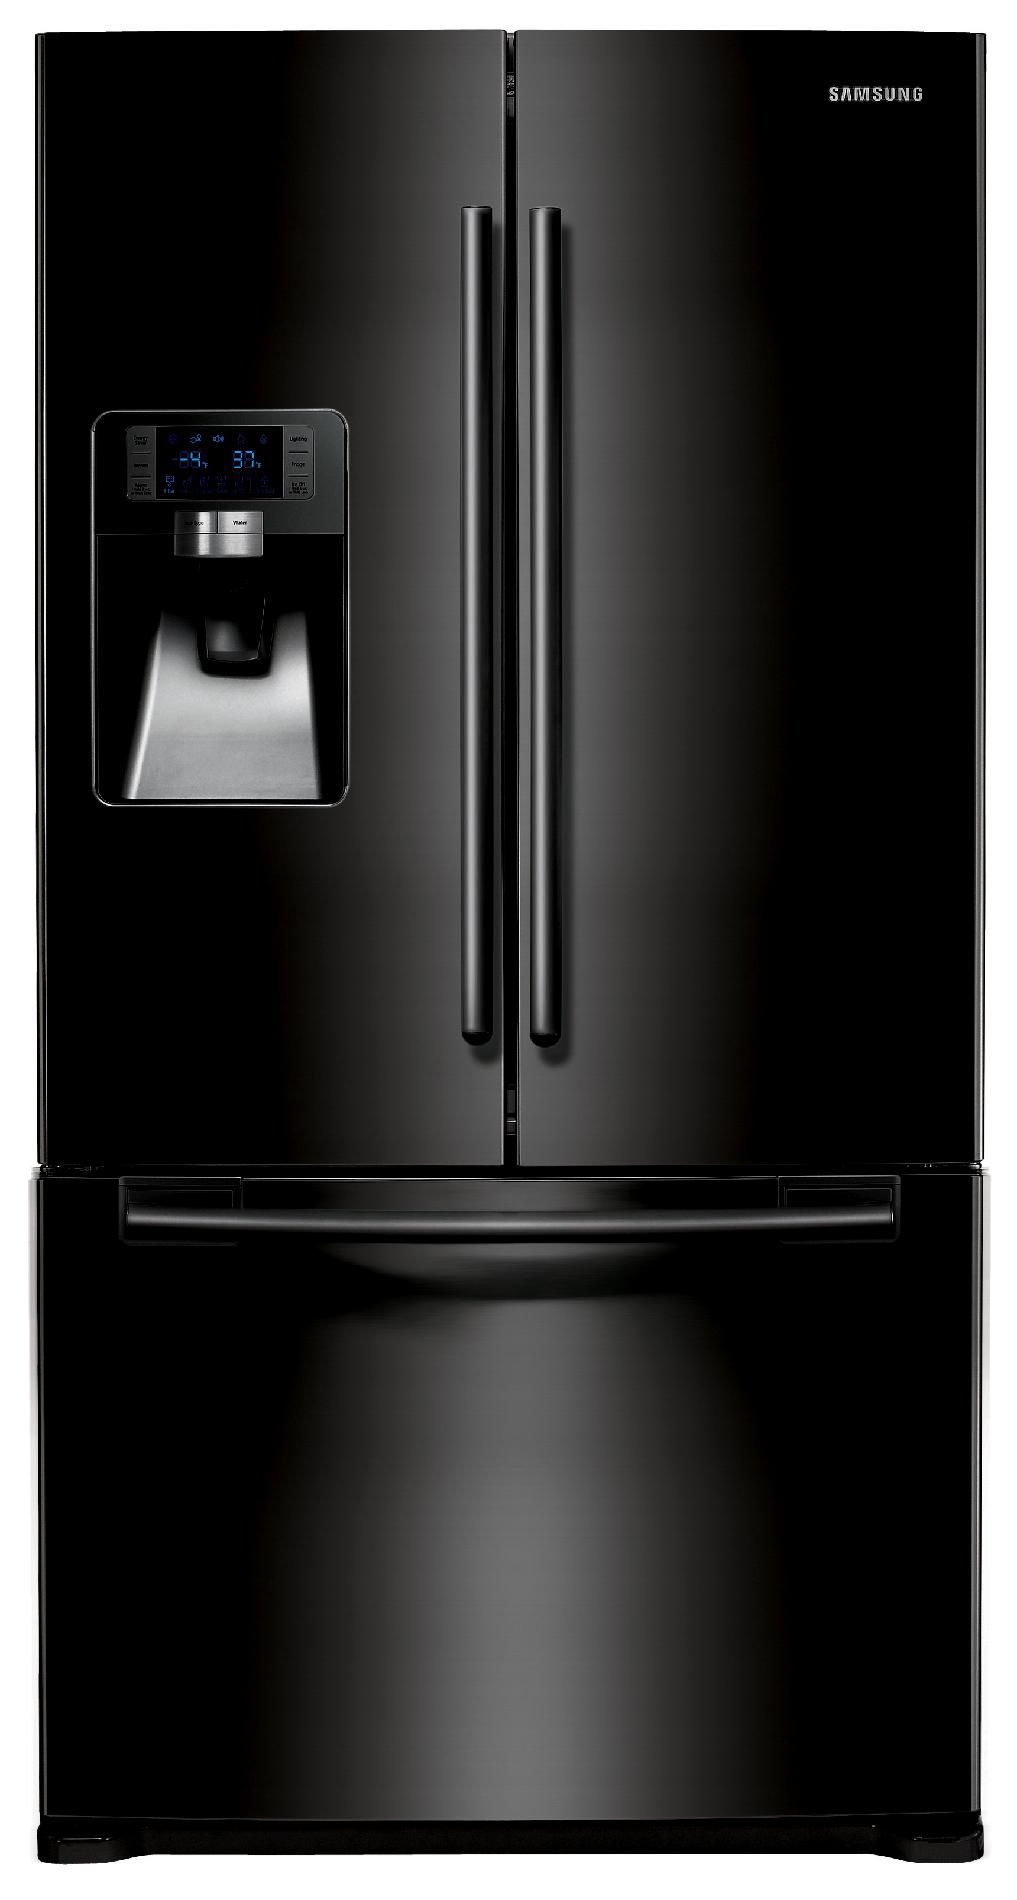 Samsung 23.0 cu. ft. Counter Depth French-Door Refrigerator - Black